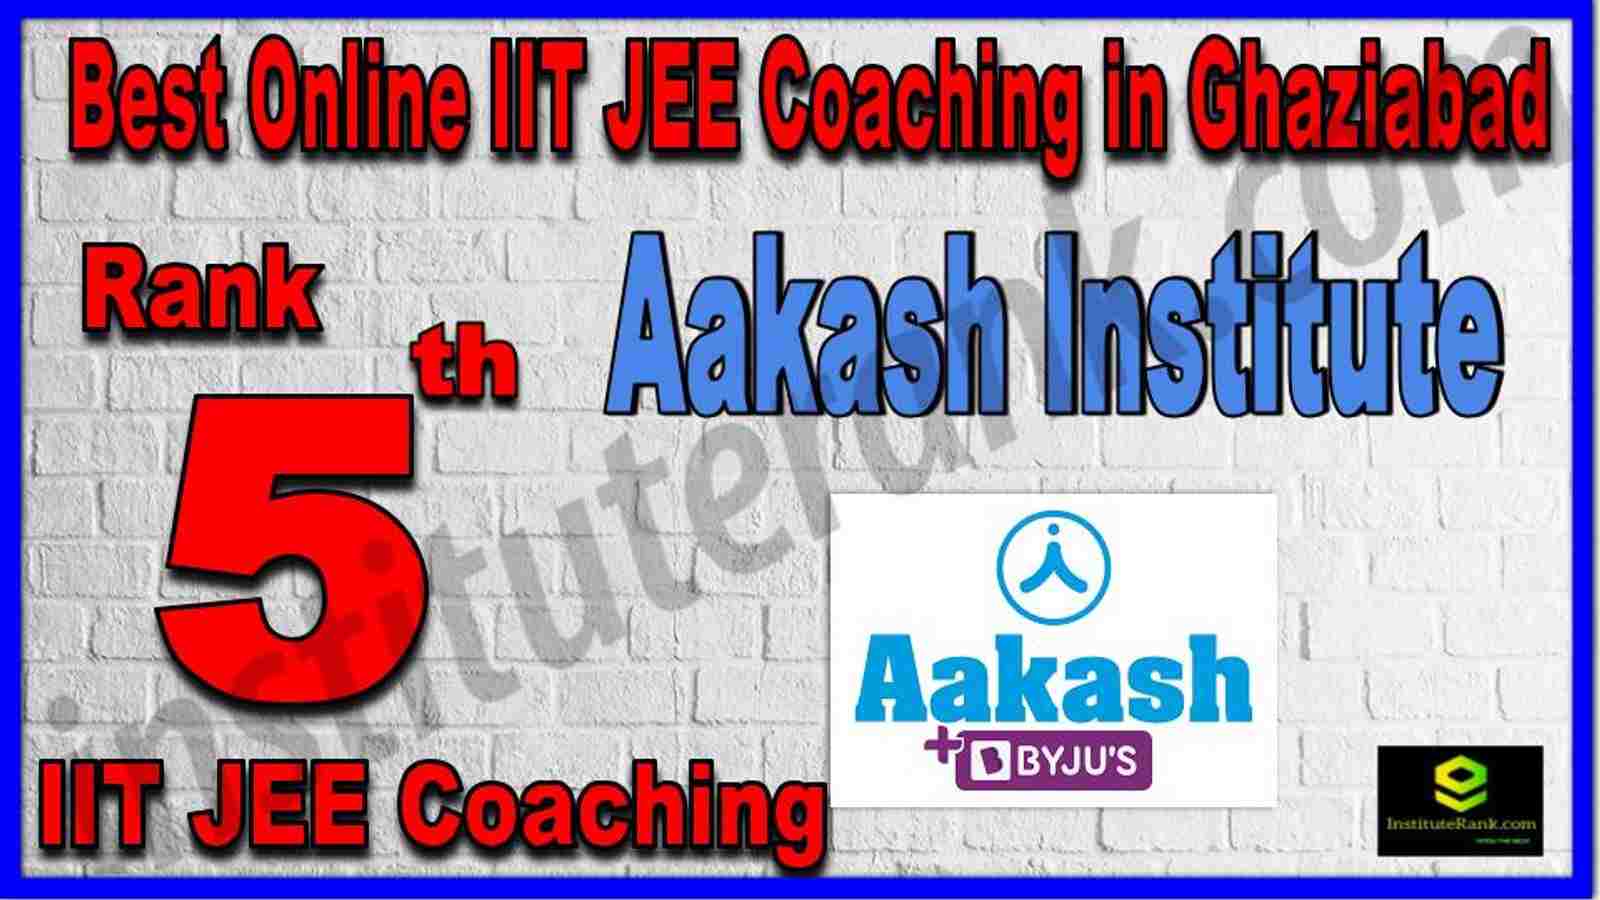 Rank 5th Best Online IIT JEE Coaching in Ghaziabad